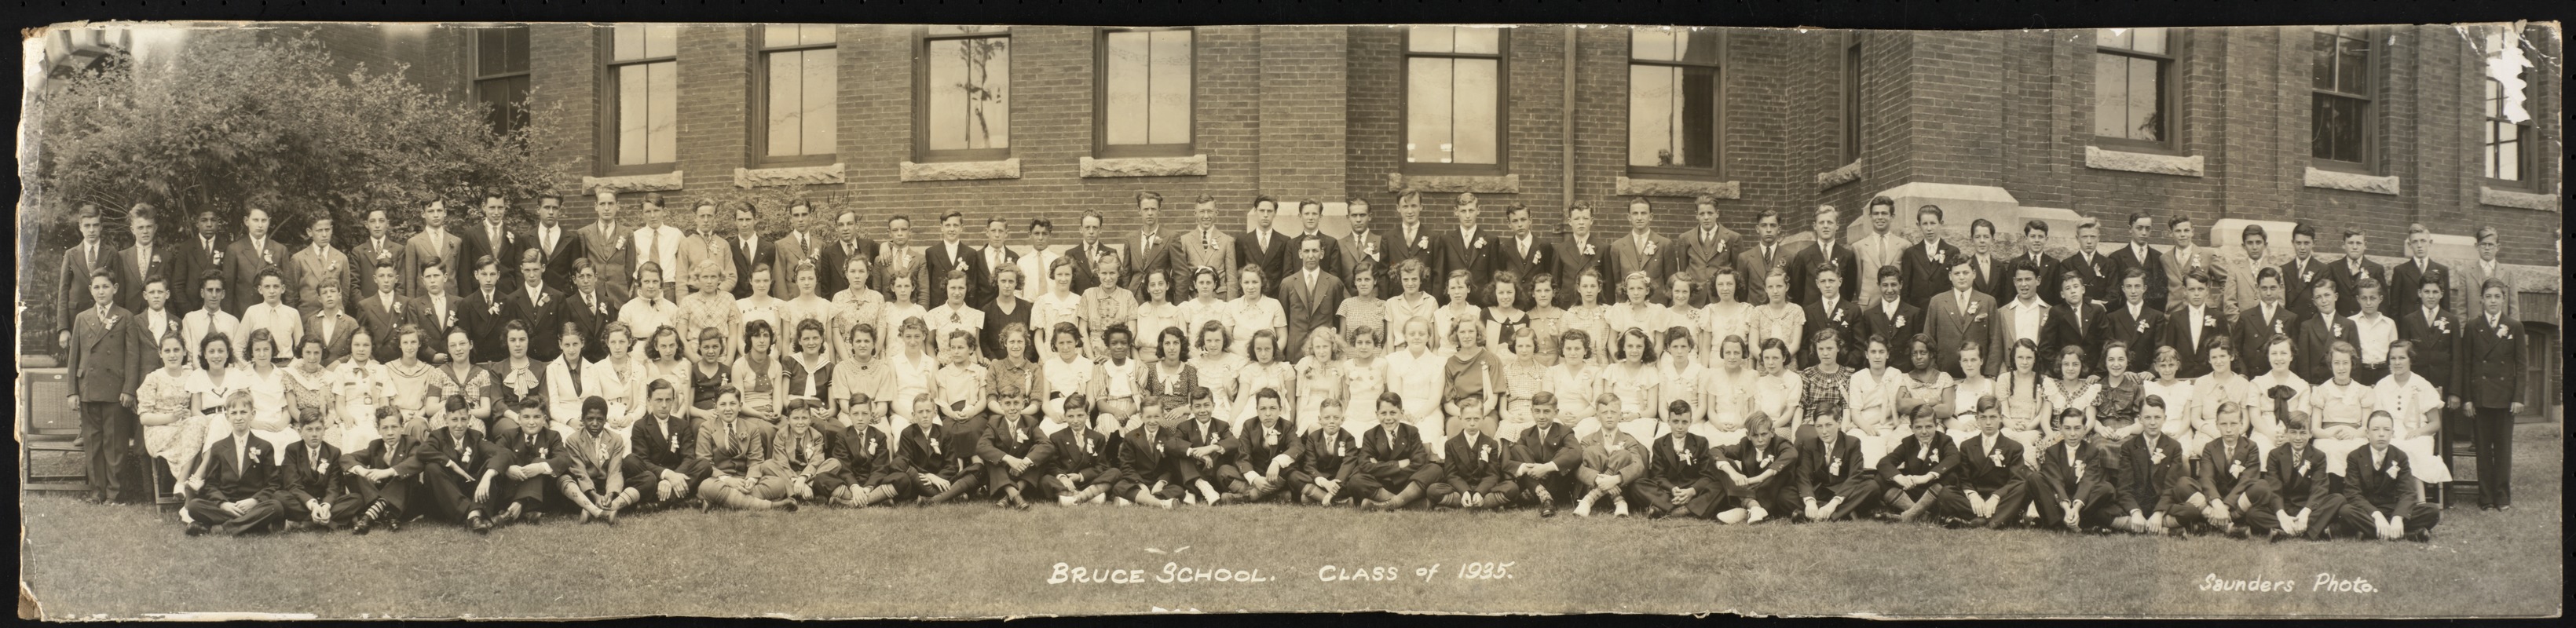 Bruce School class of 1935